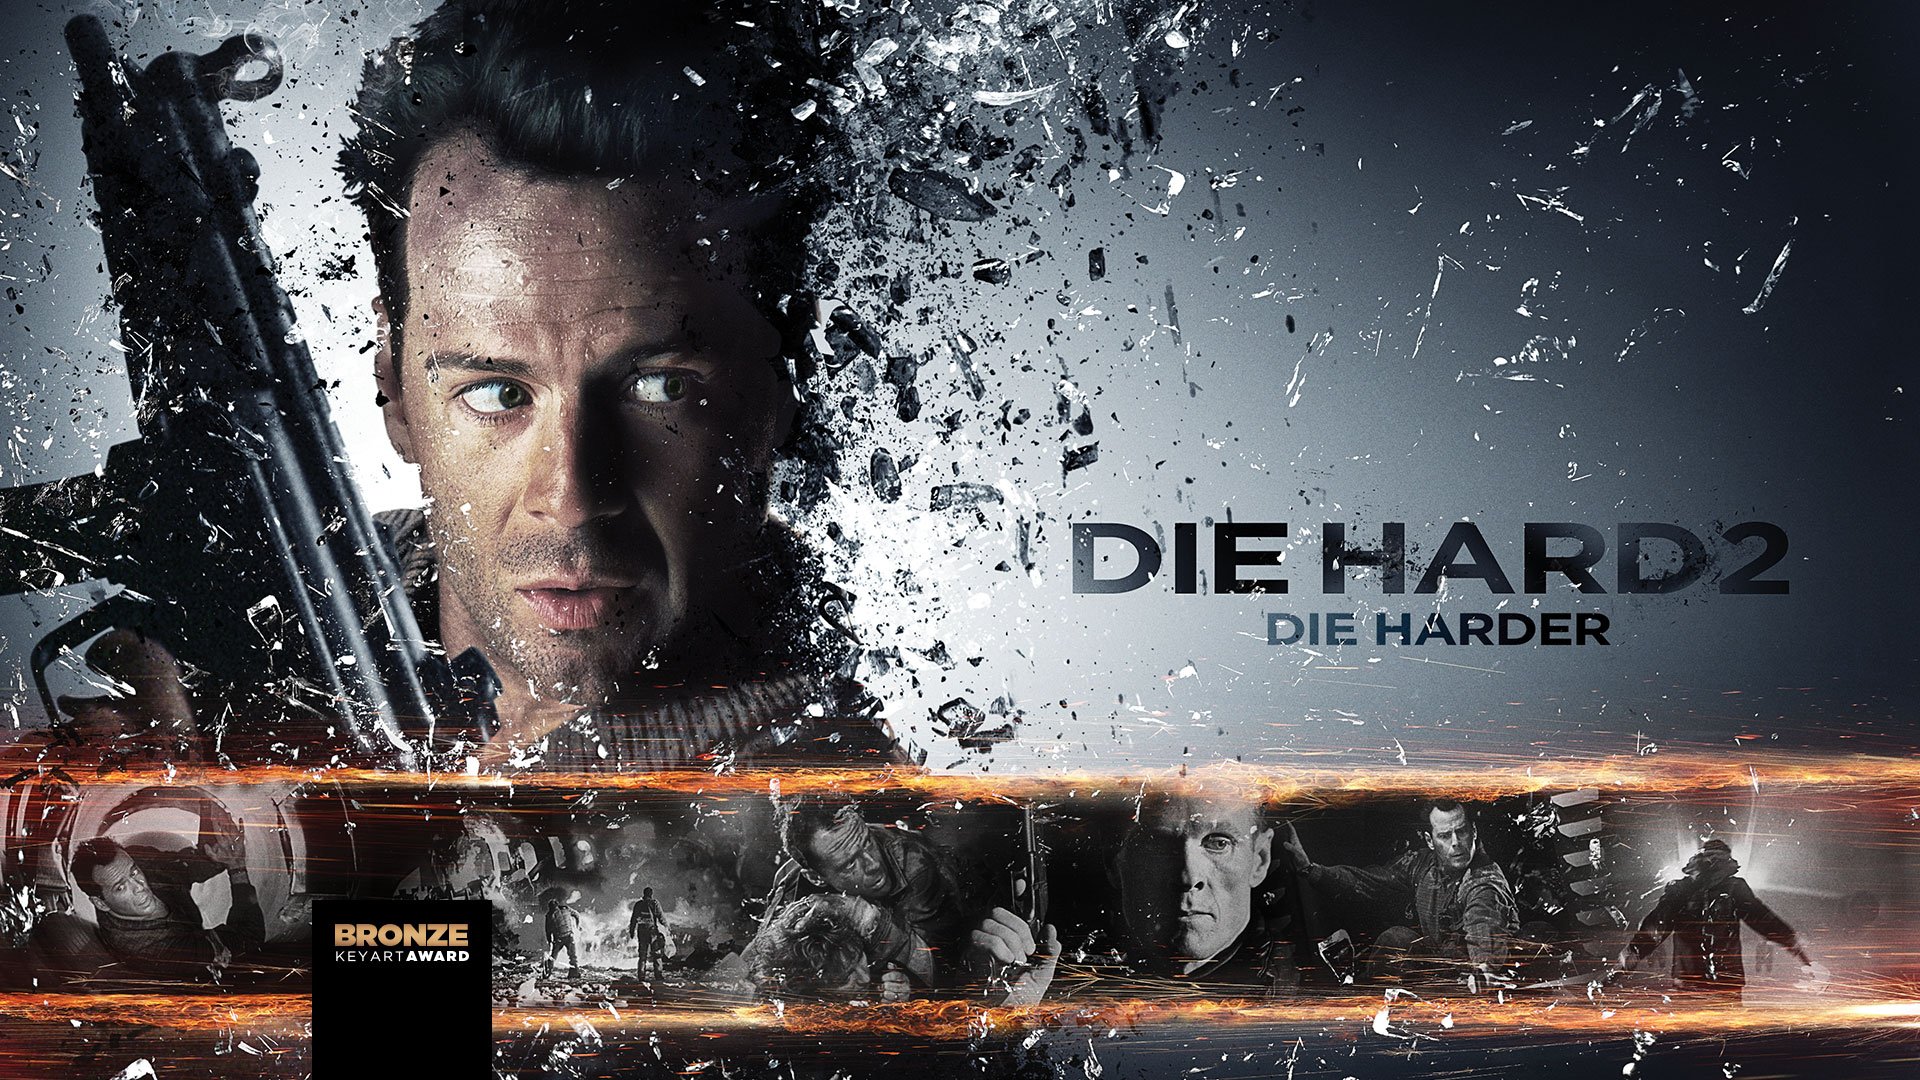 Die Hard Action Crime Thriller Wallpaper Background